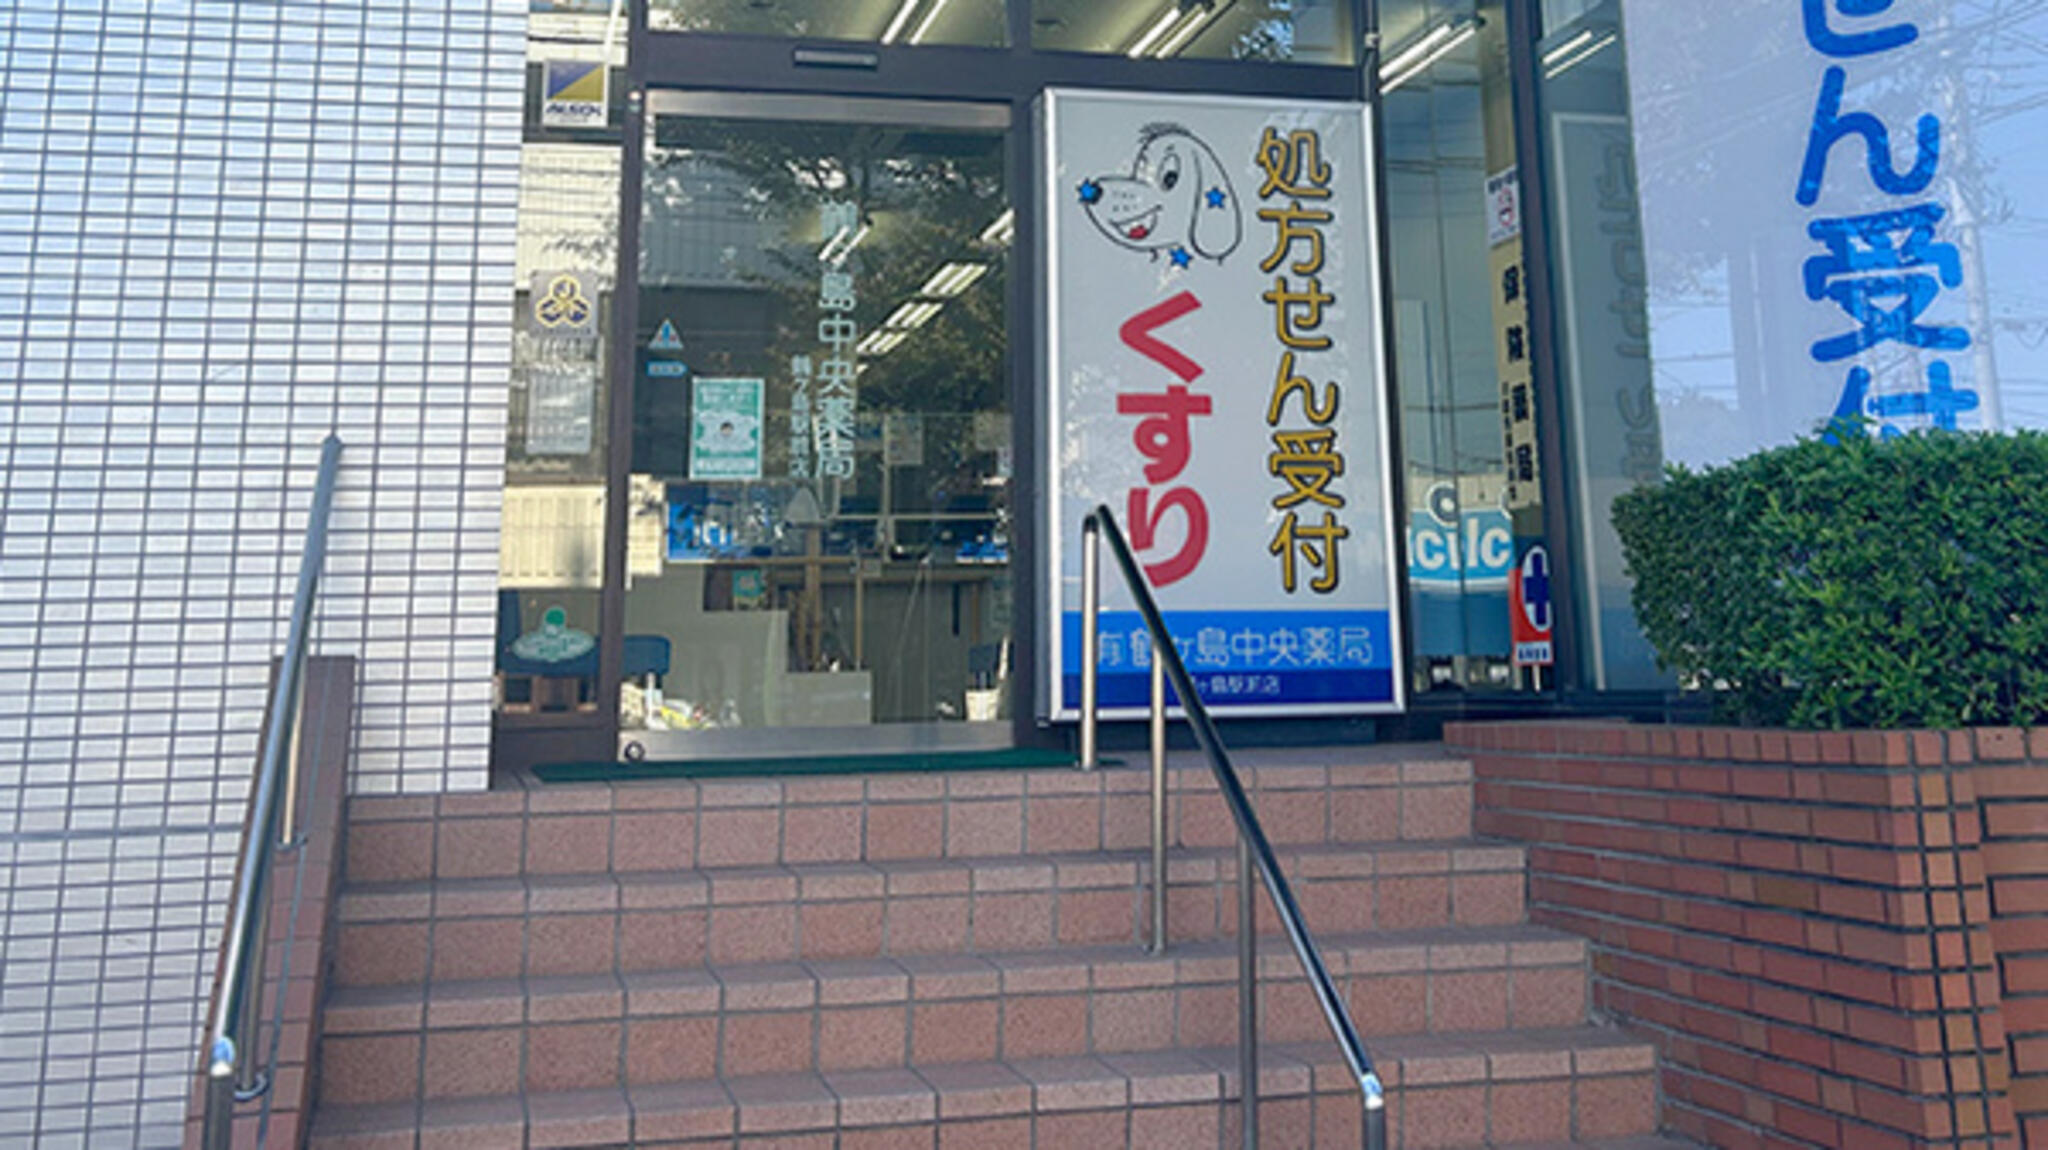 鶴ヶ島中央薬局 鶴ヶ島駅前店の代表写真5